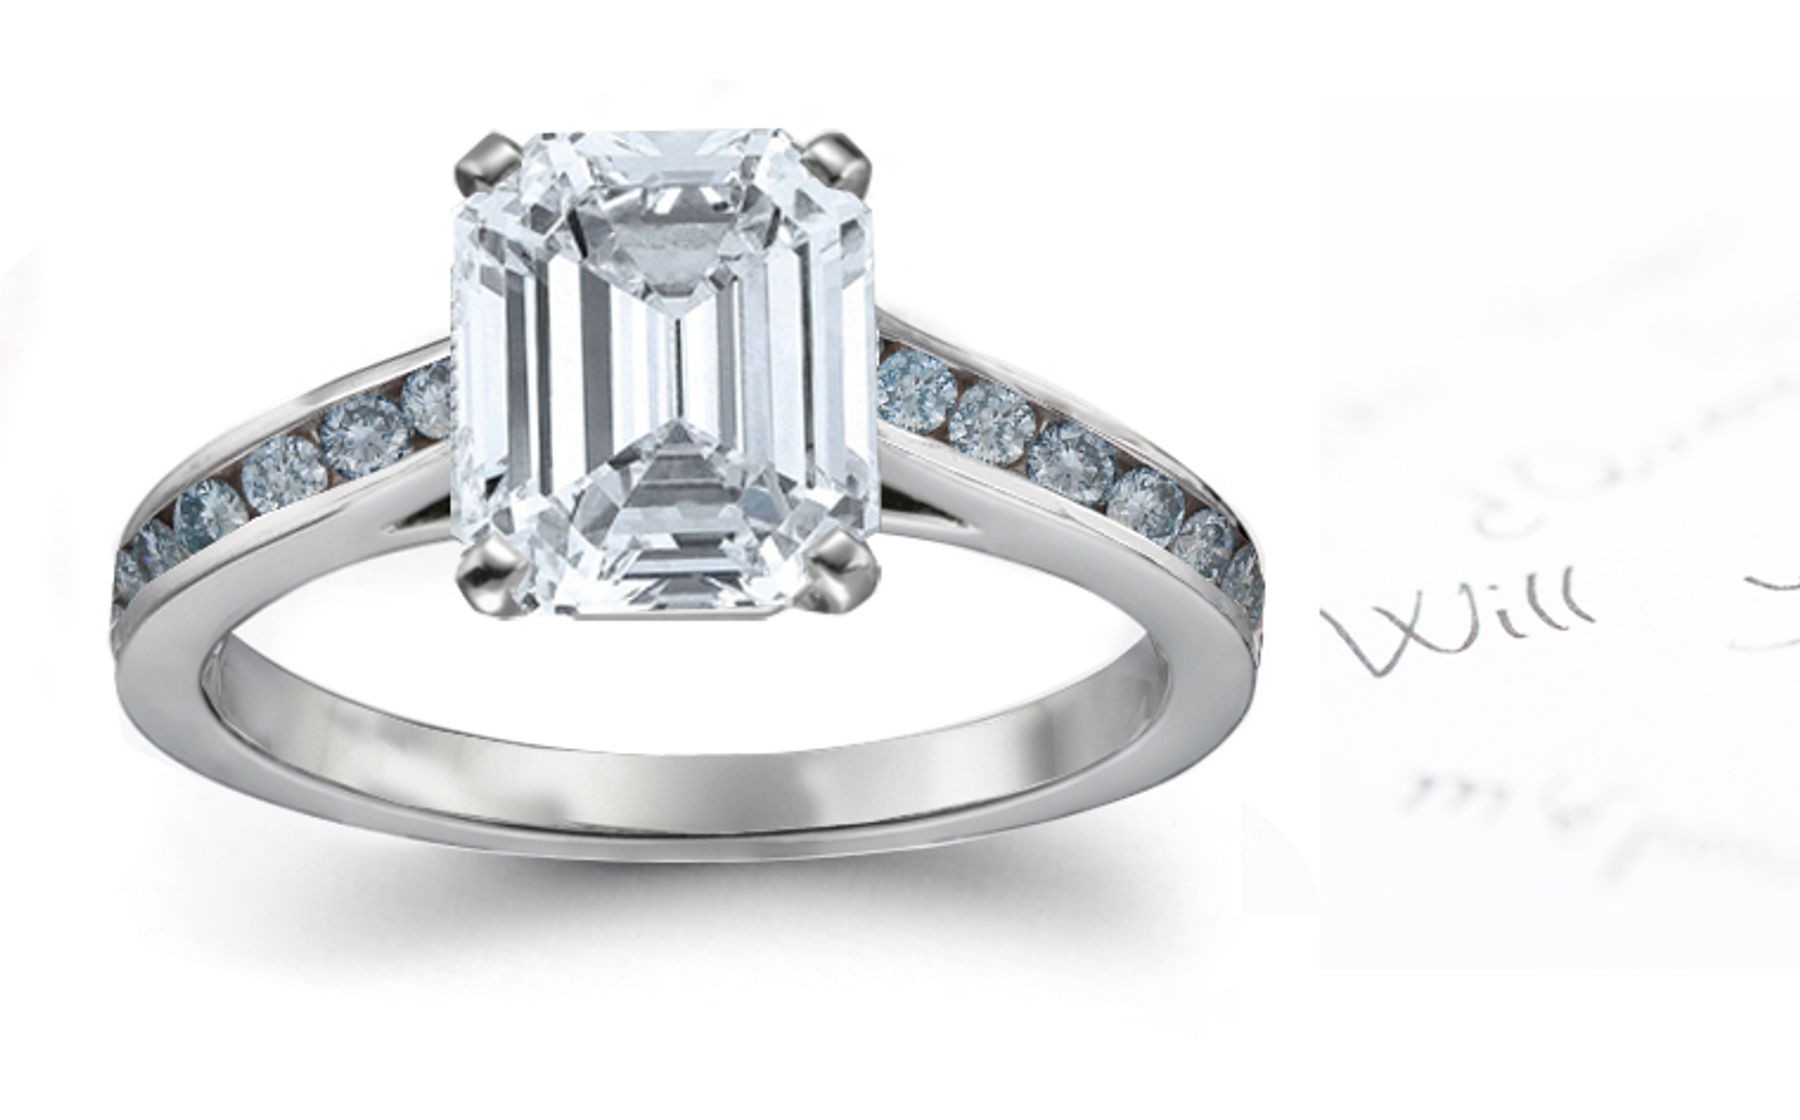 Blue & White Emerald Cut Diamond Engagement Ring